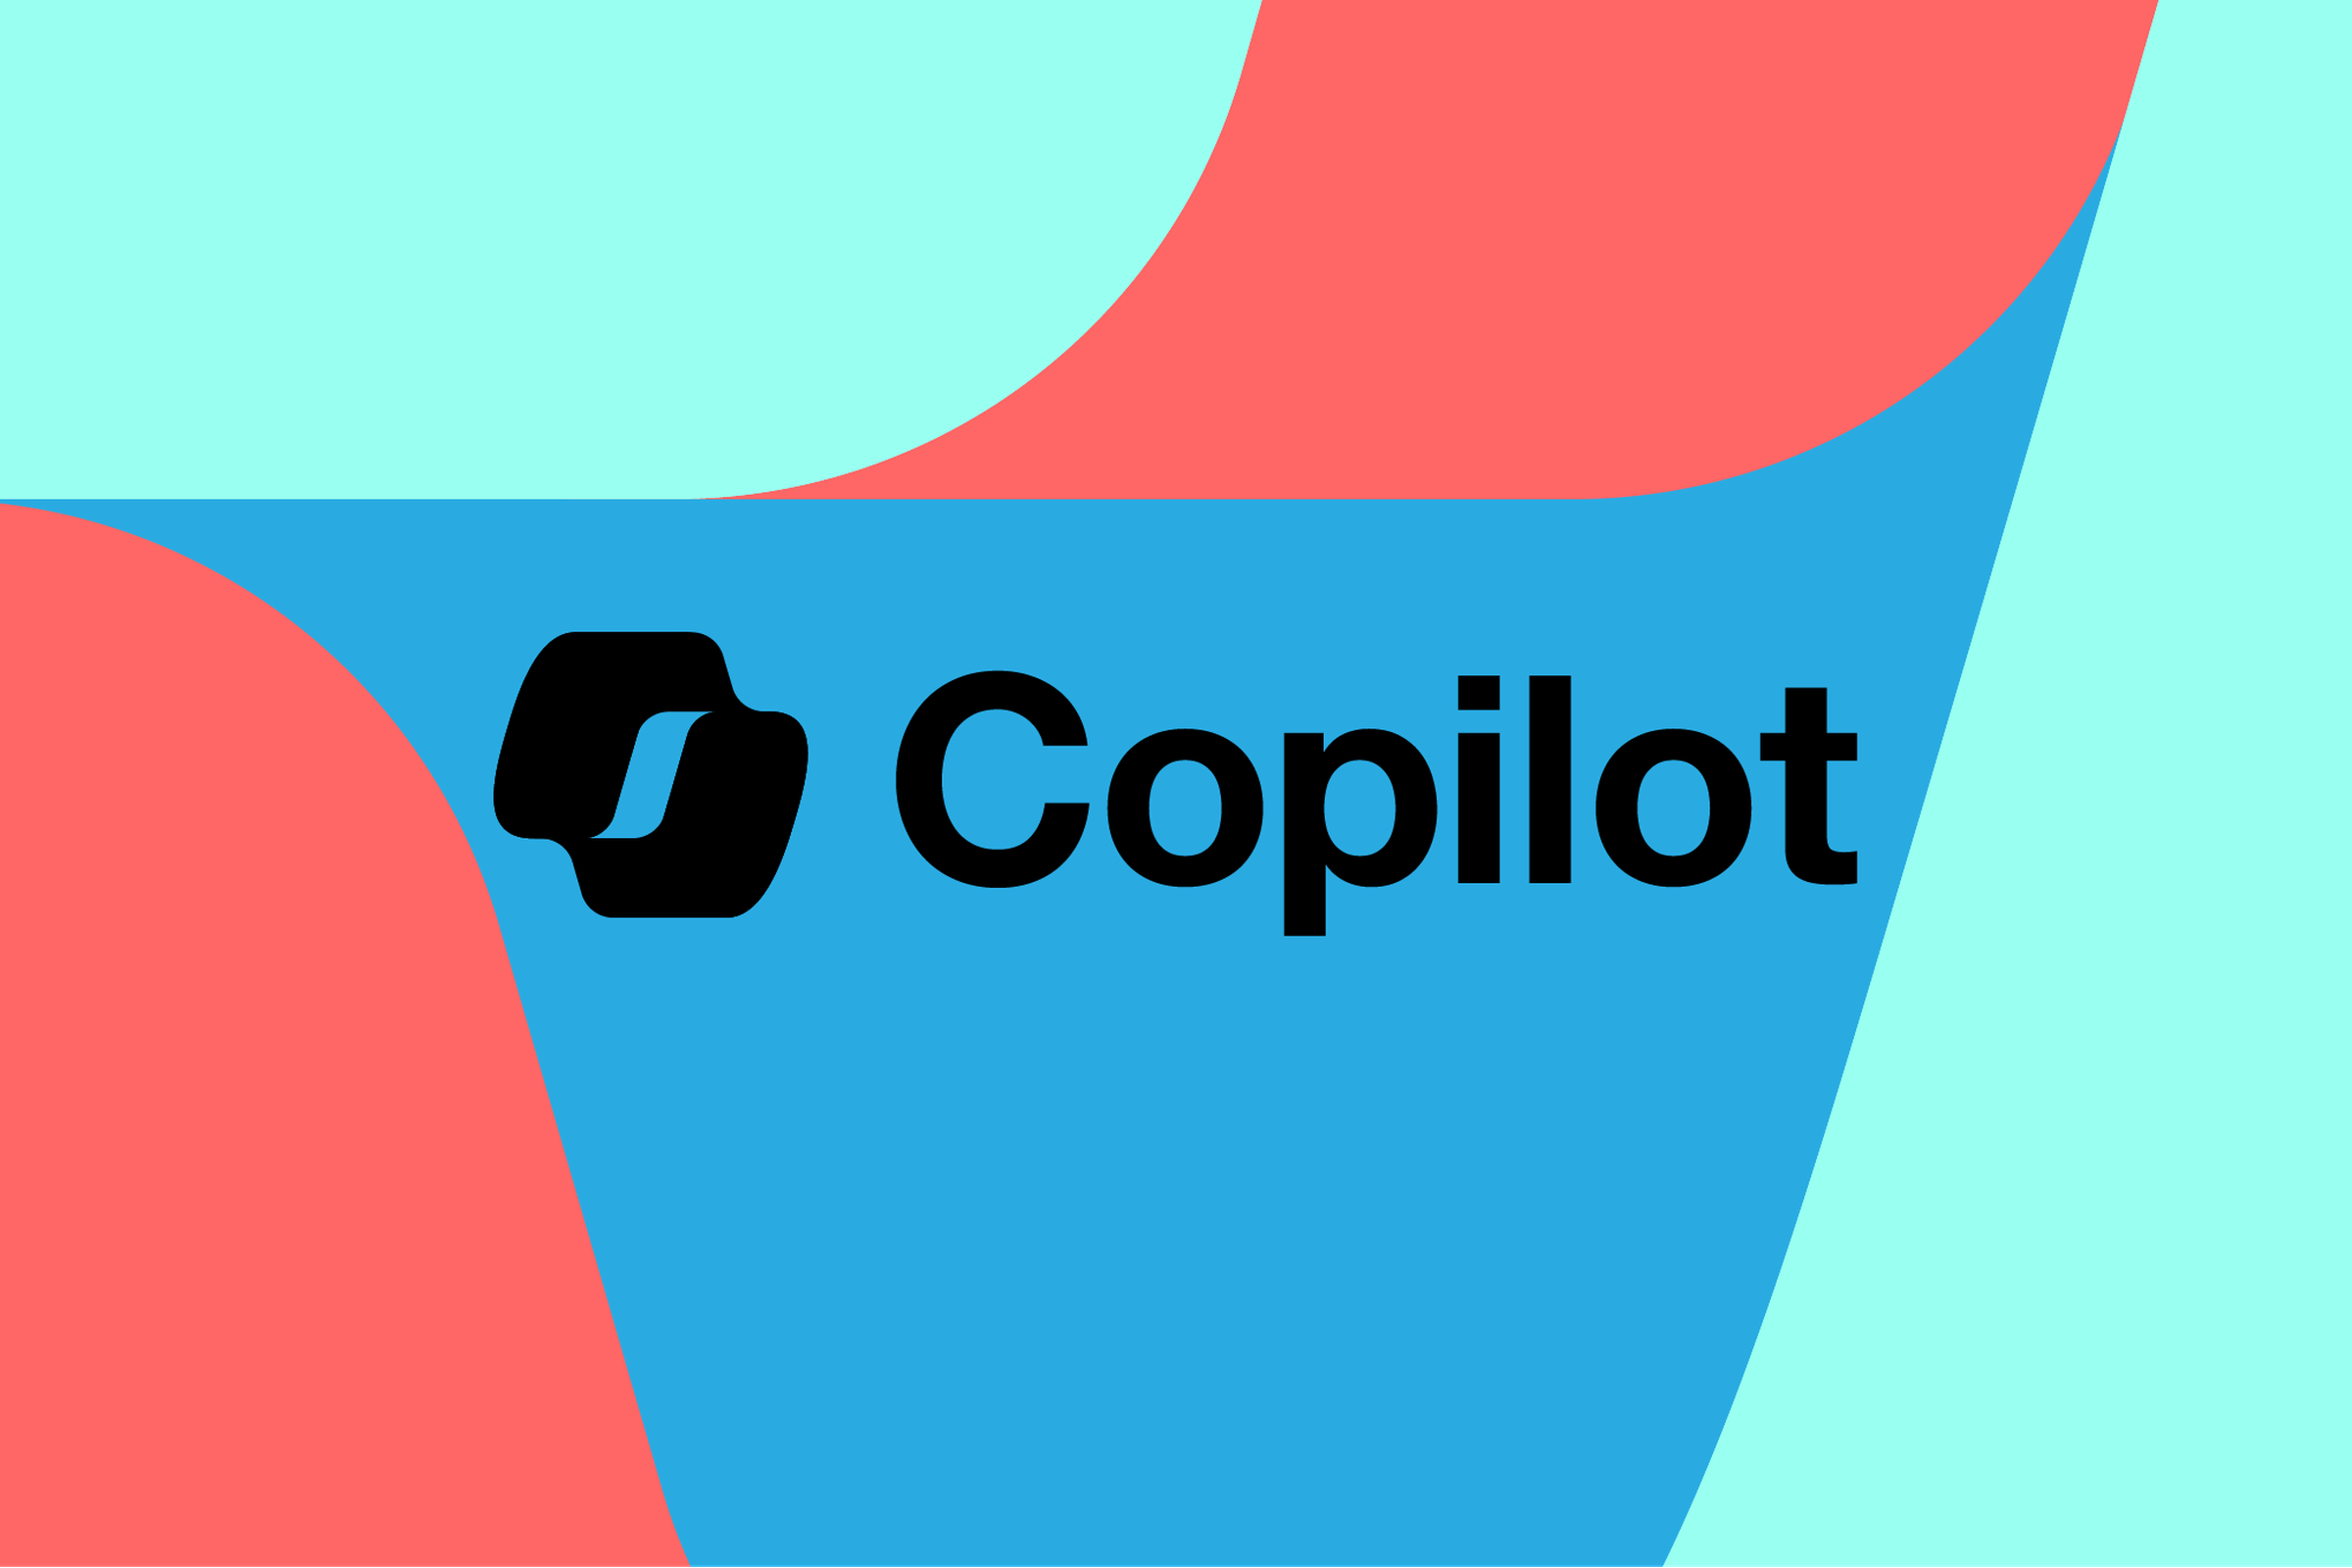 Vector illustration of the Microsoft Copilot logo.